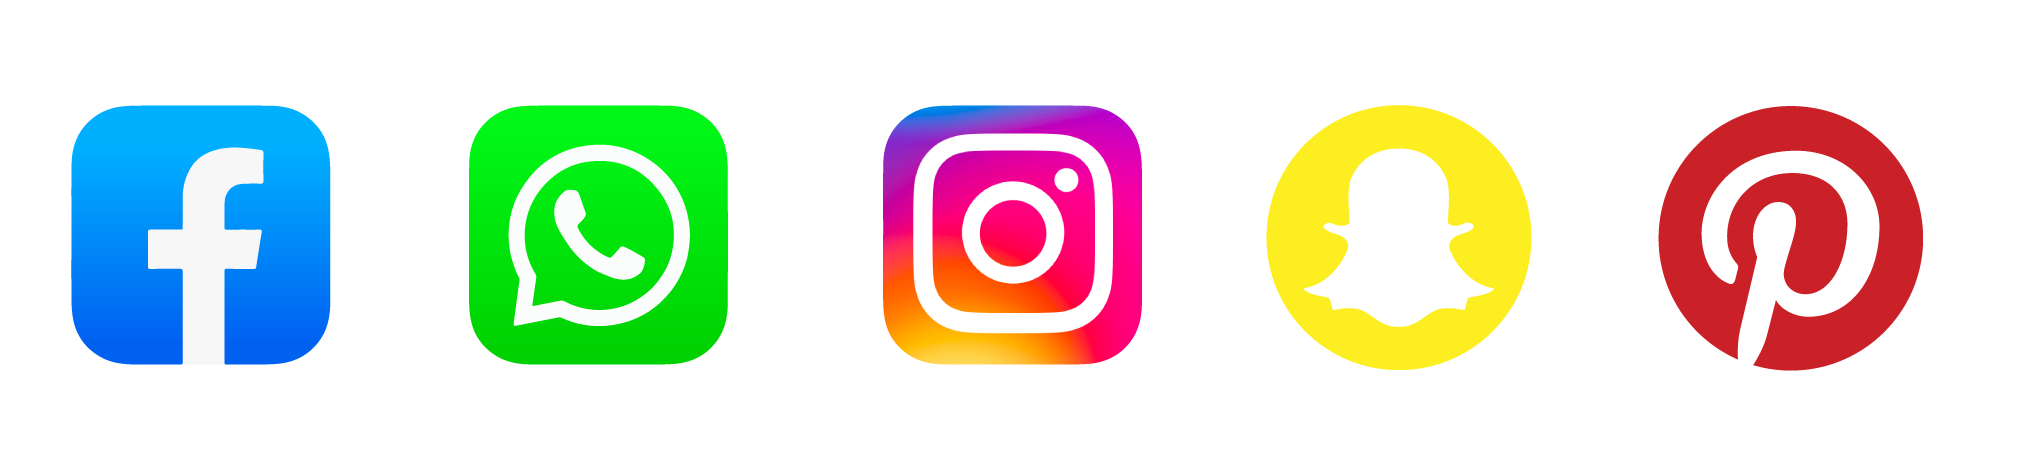 Facebook, Whatsapp, Instagram, Snapchat y Pinterest